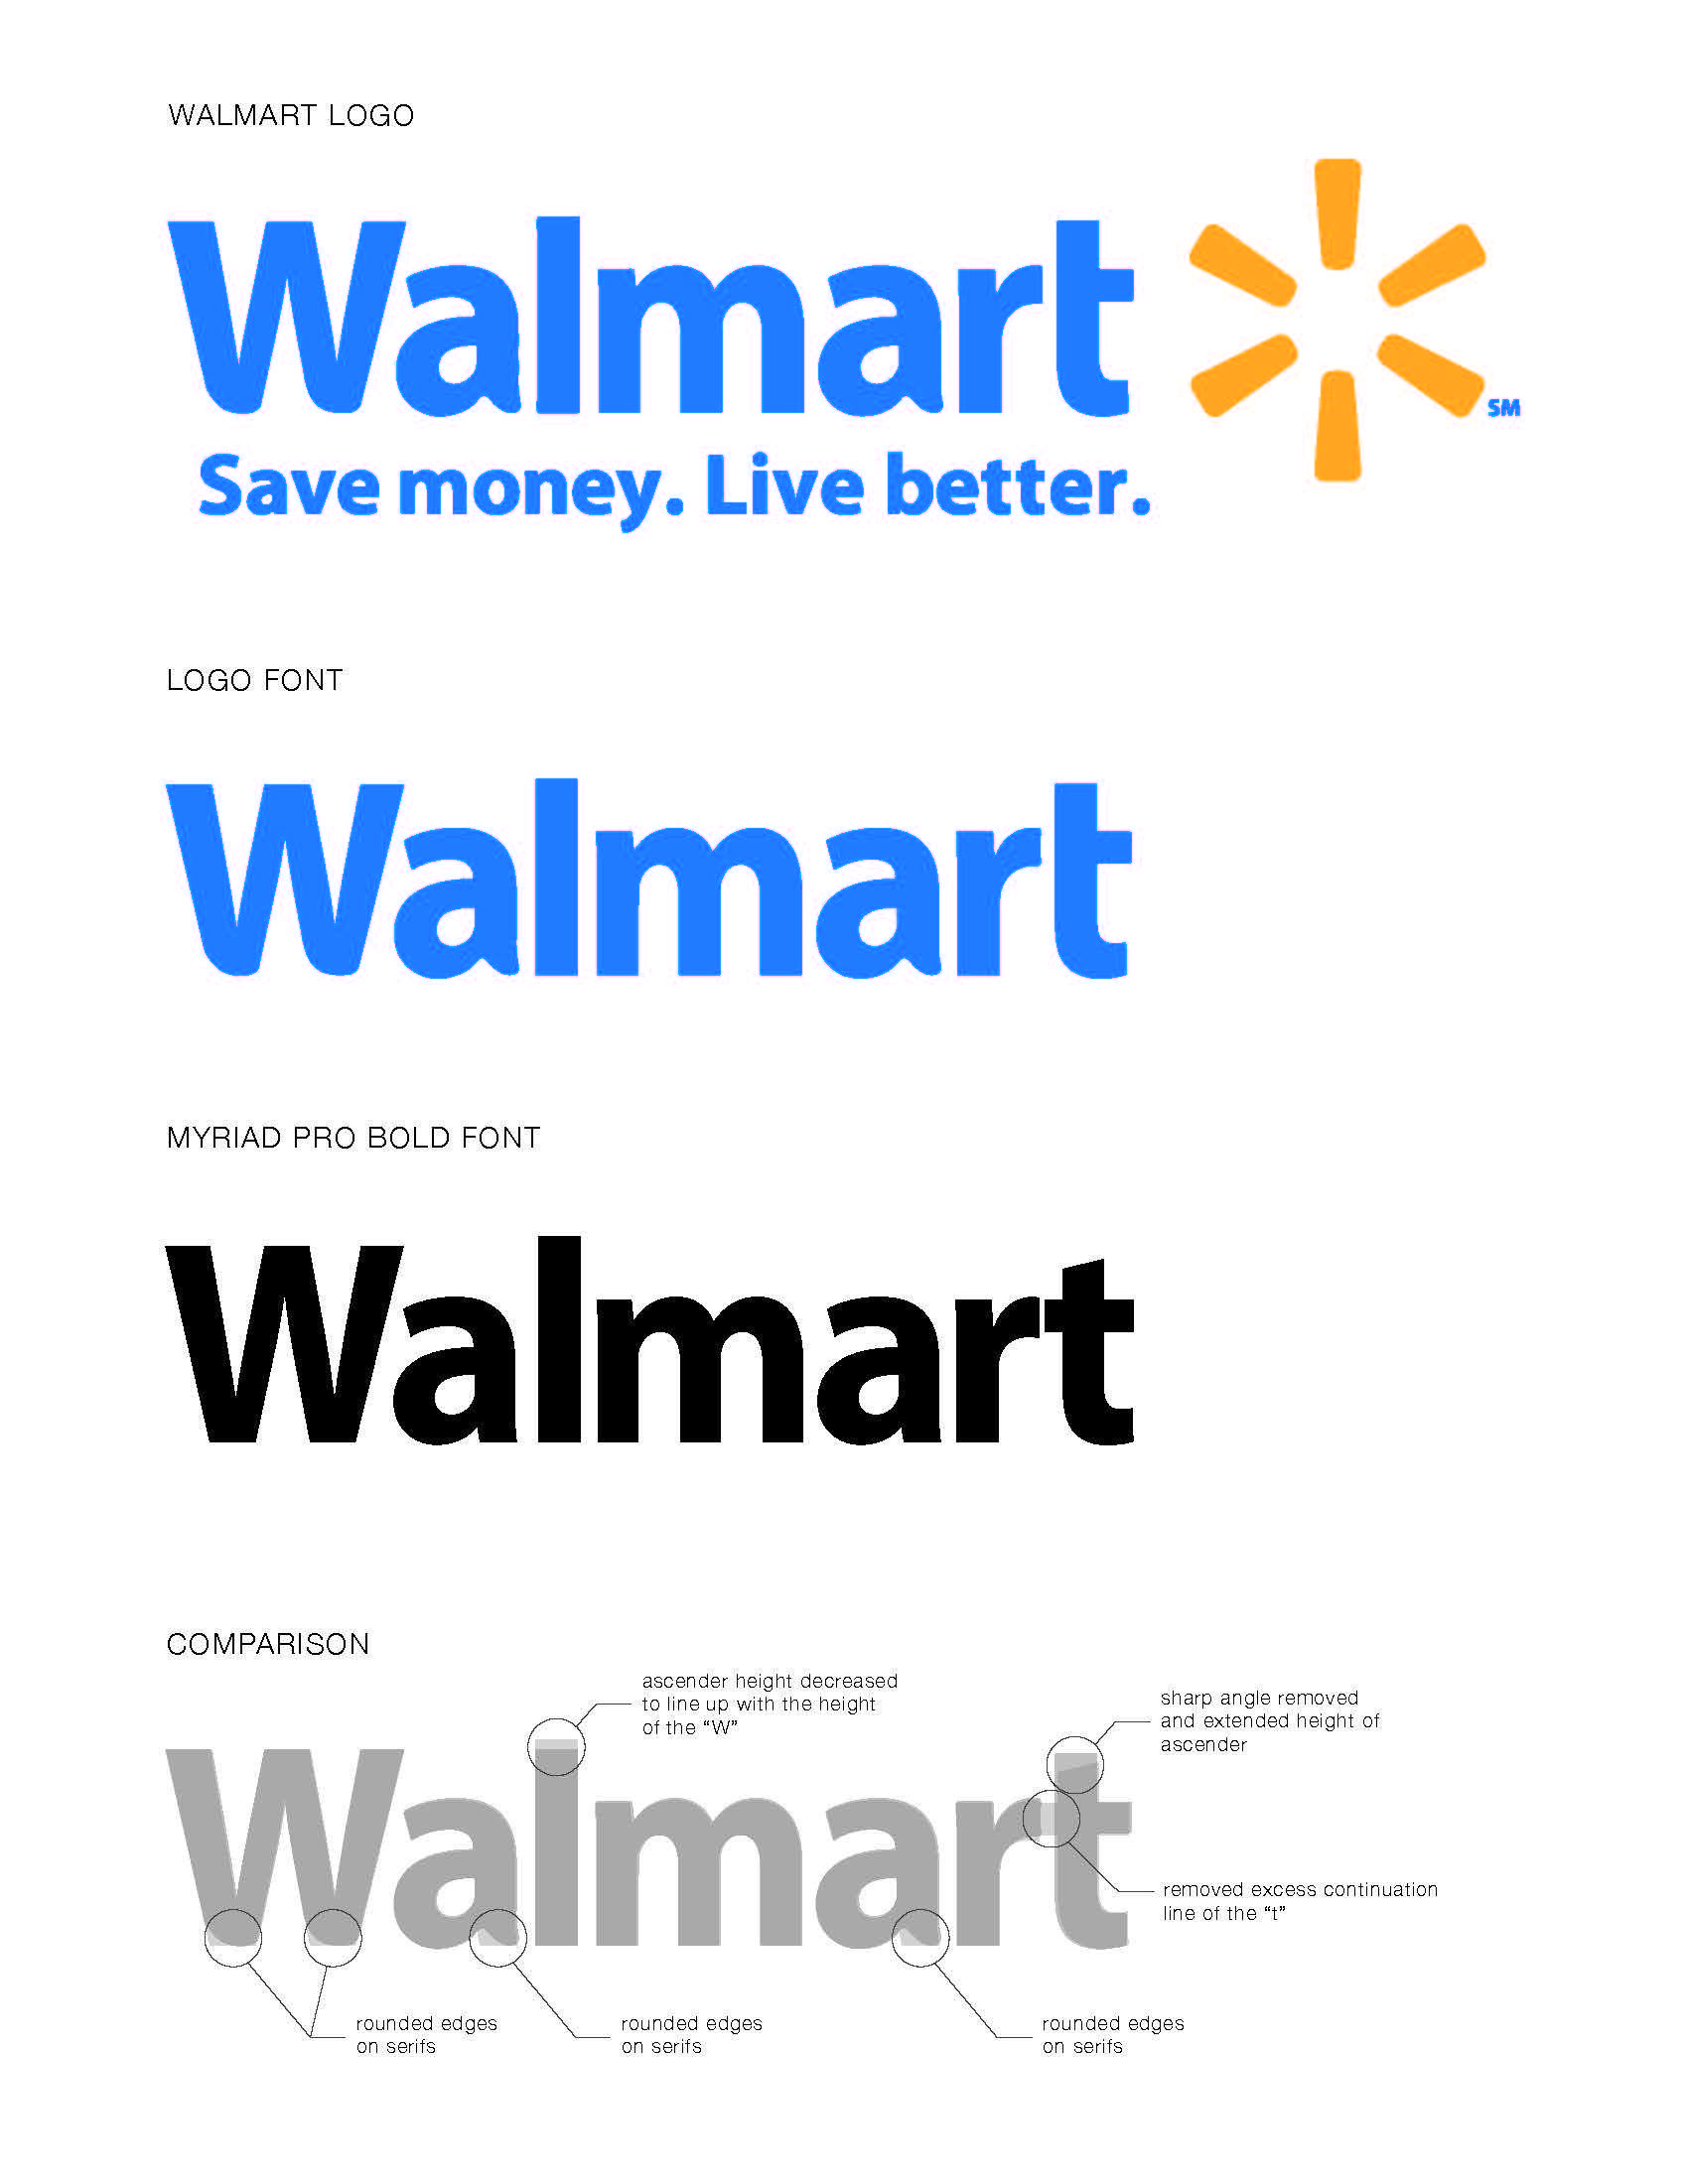 Walmart Old Logo - WAL+MART, Foundation donates $1 Million to Hurrican Harvey Victims ...